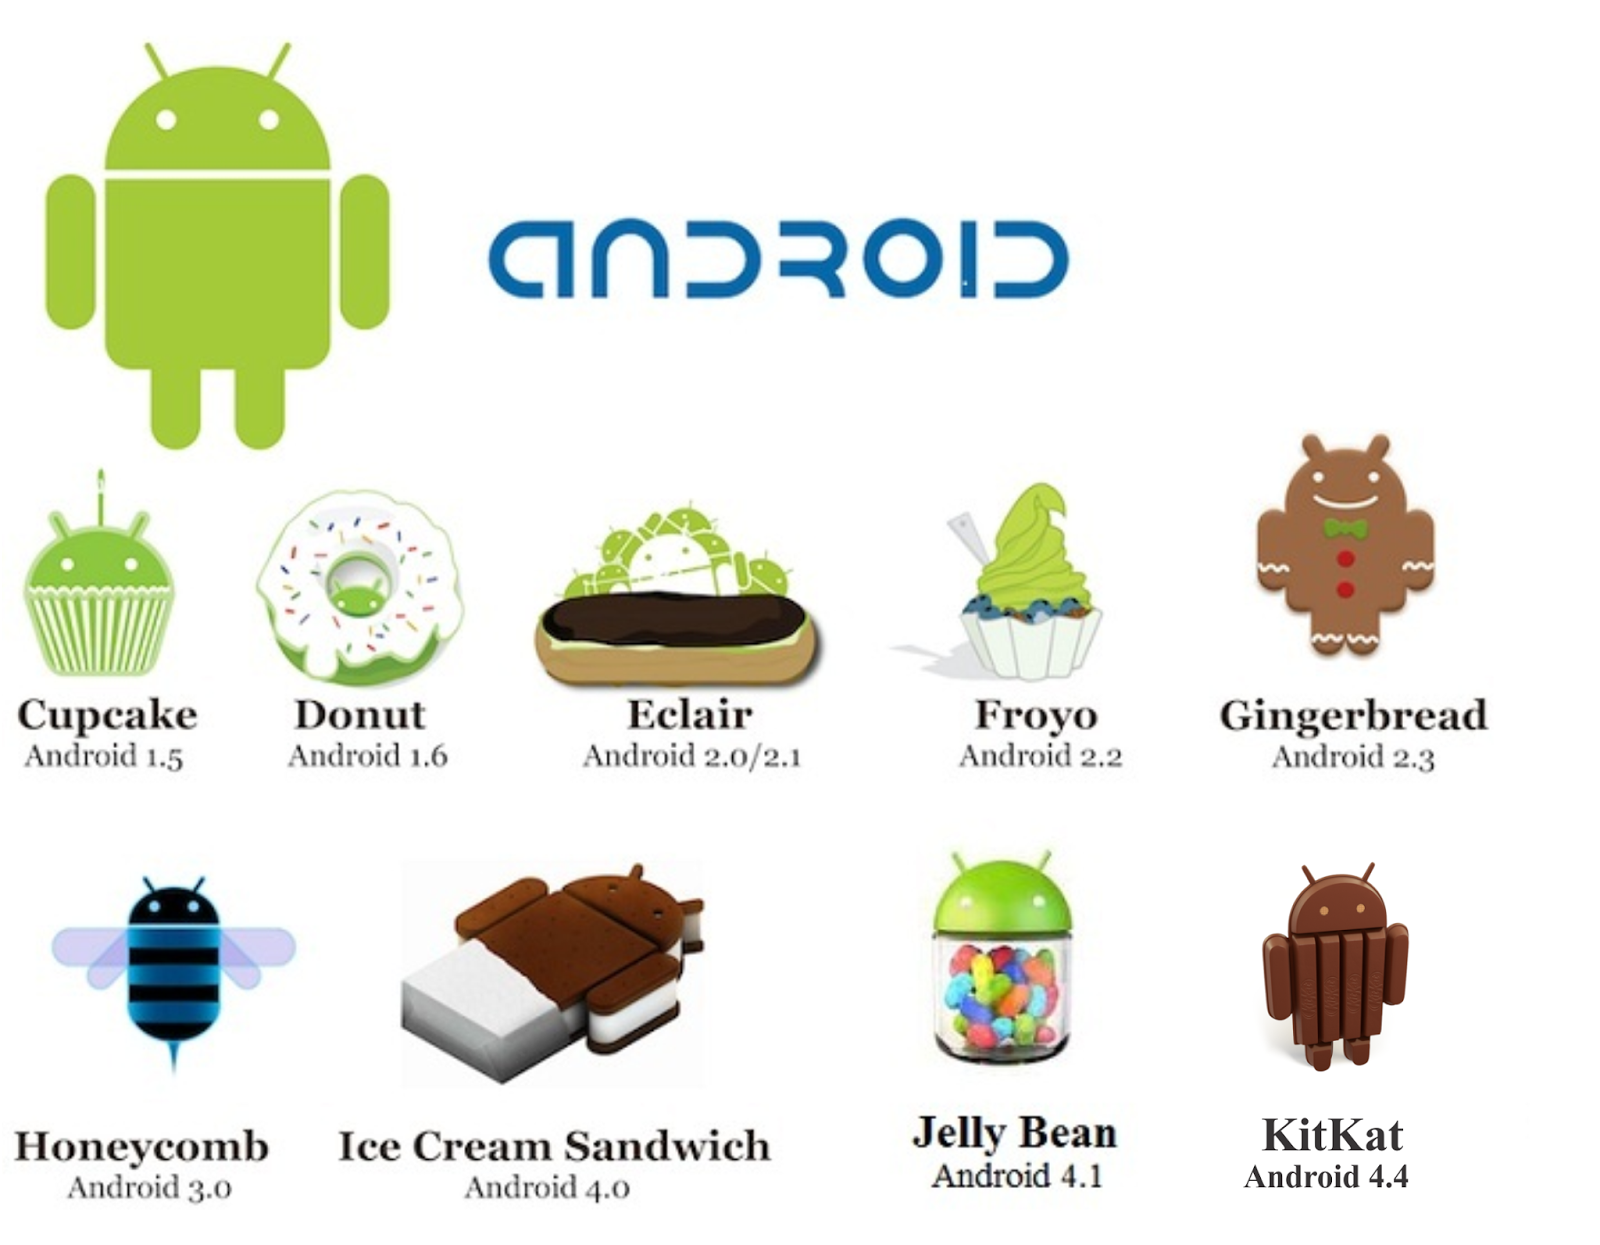 Android года выпуска. Андроид. Версии андроид. ОС андроид. Названия версий андроид.